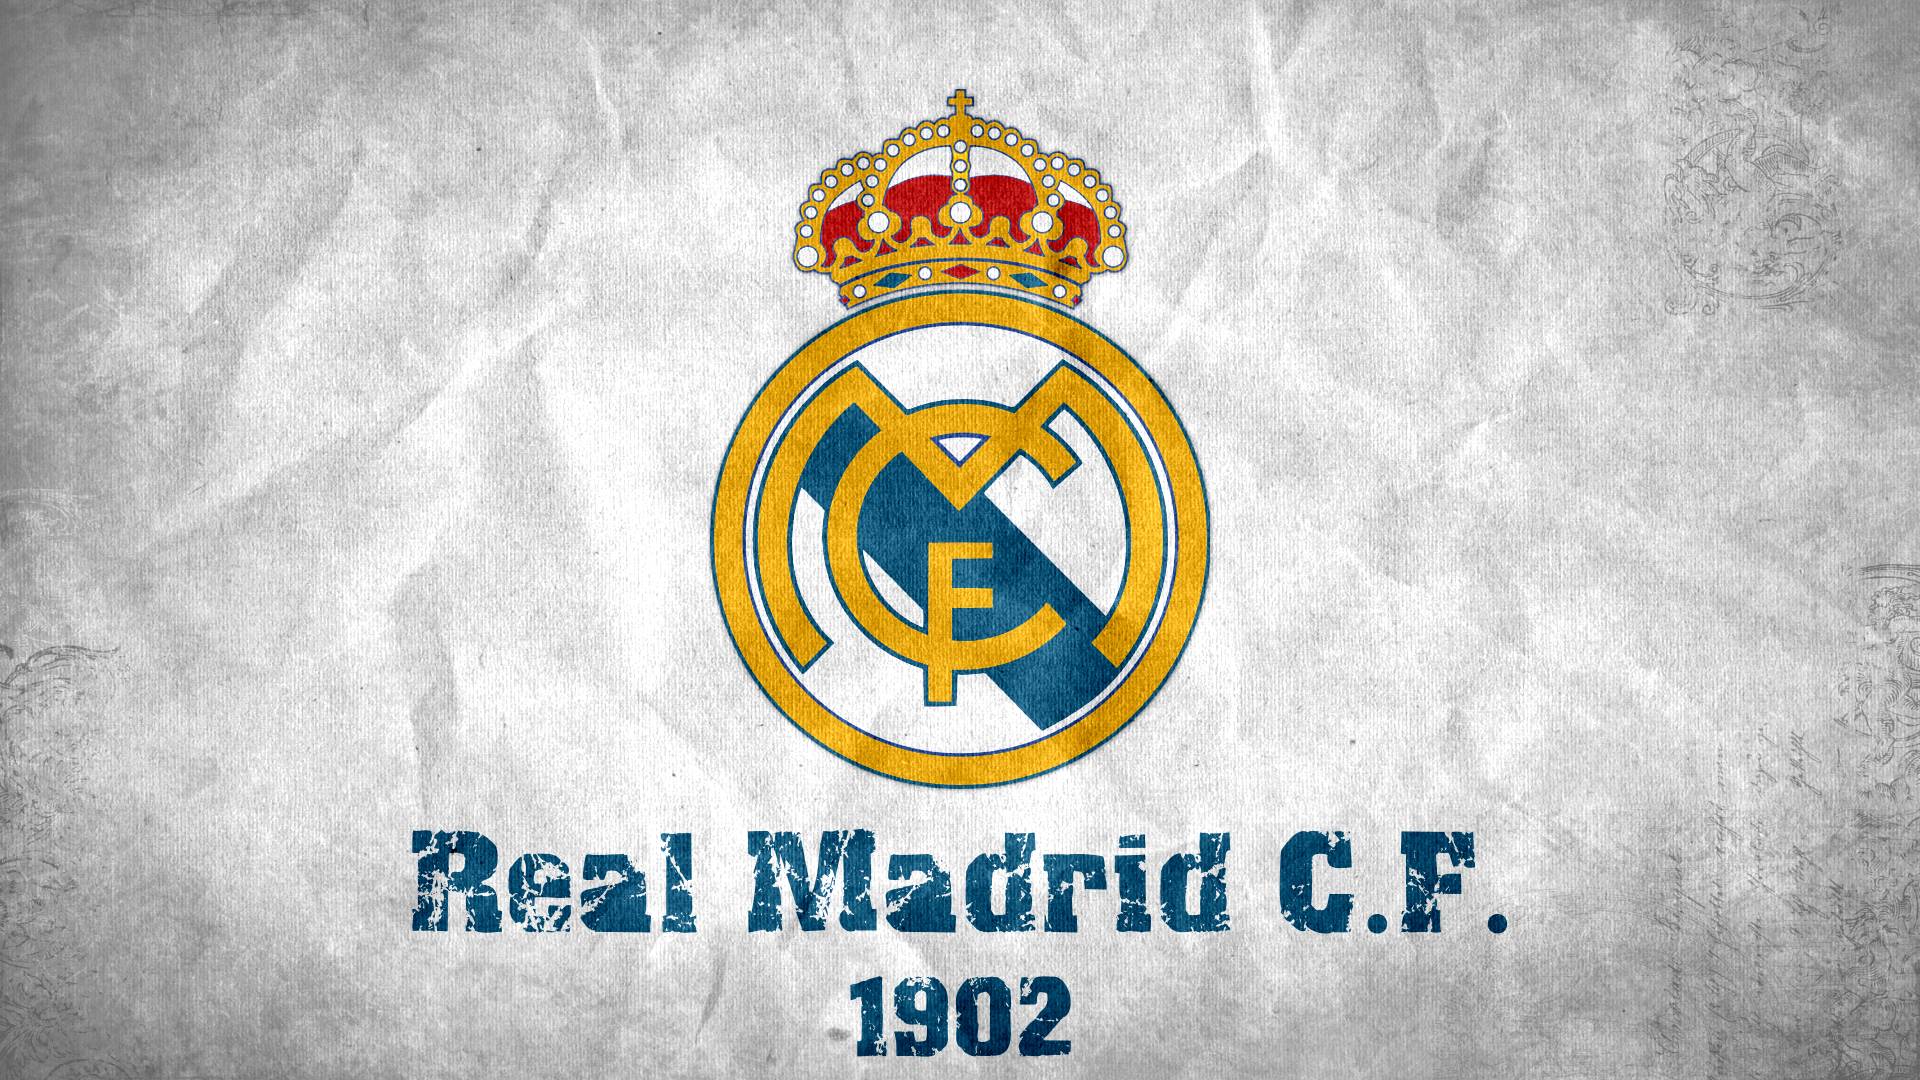 Real Madrid Logo Wallpapers HD 2015 - Wallpaper Cave